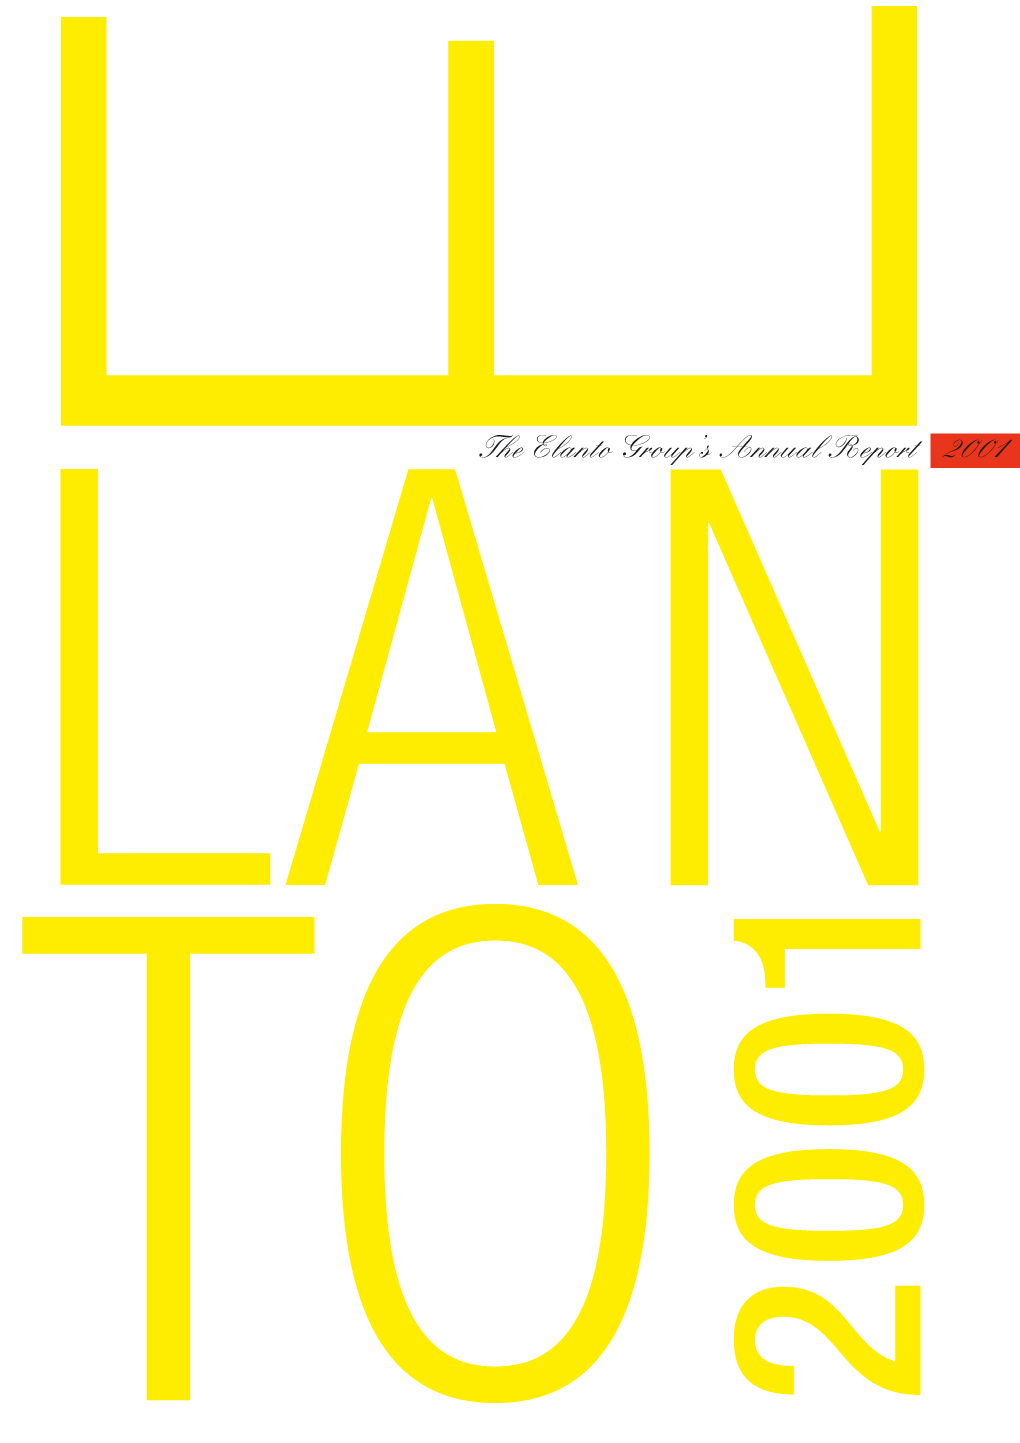 Elanto Group Annual Report 2001